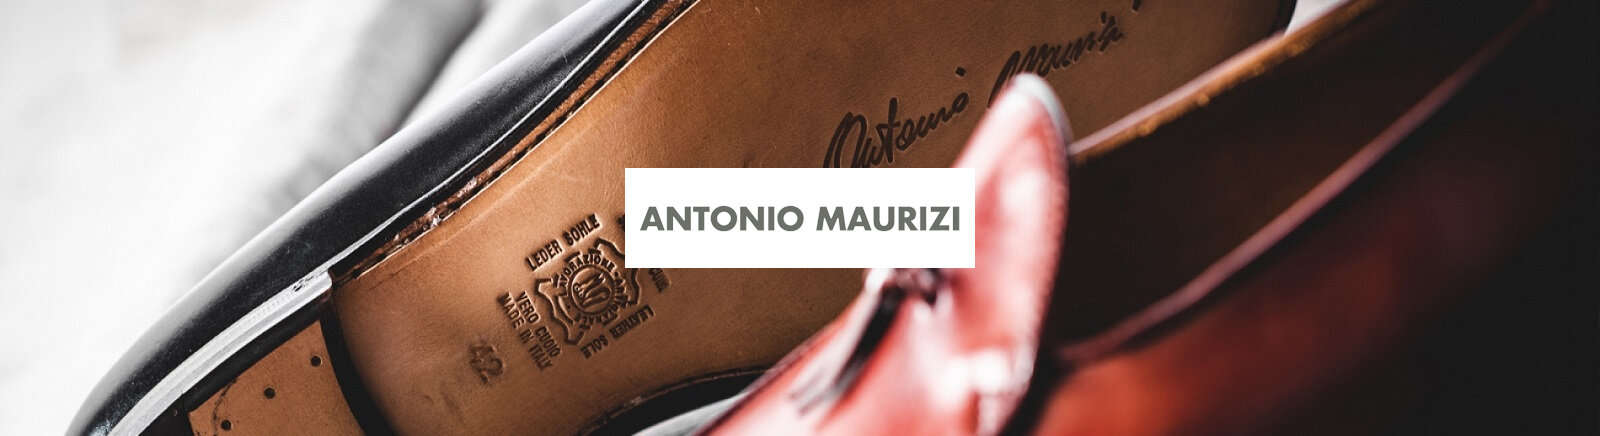 Antonio Maurizi Herrenschuhe online shoppen bei GISY